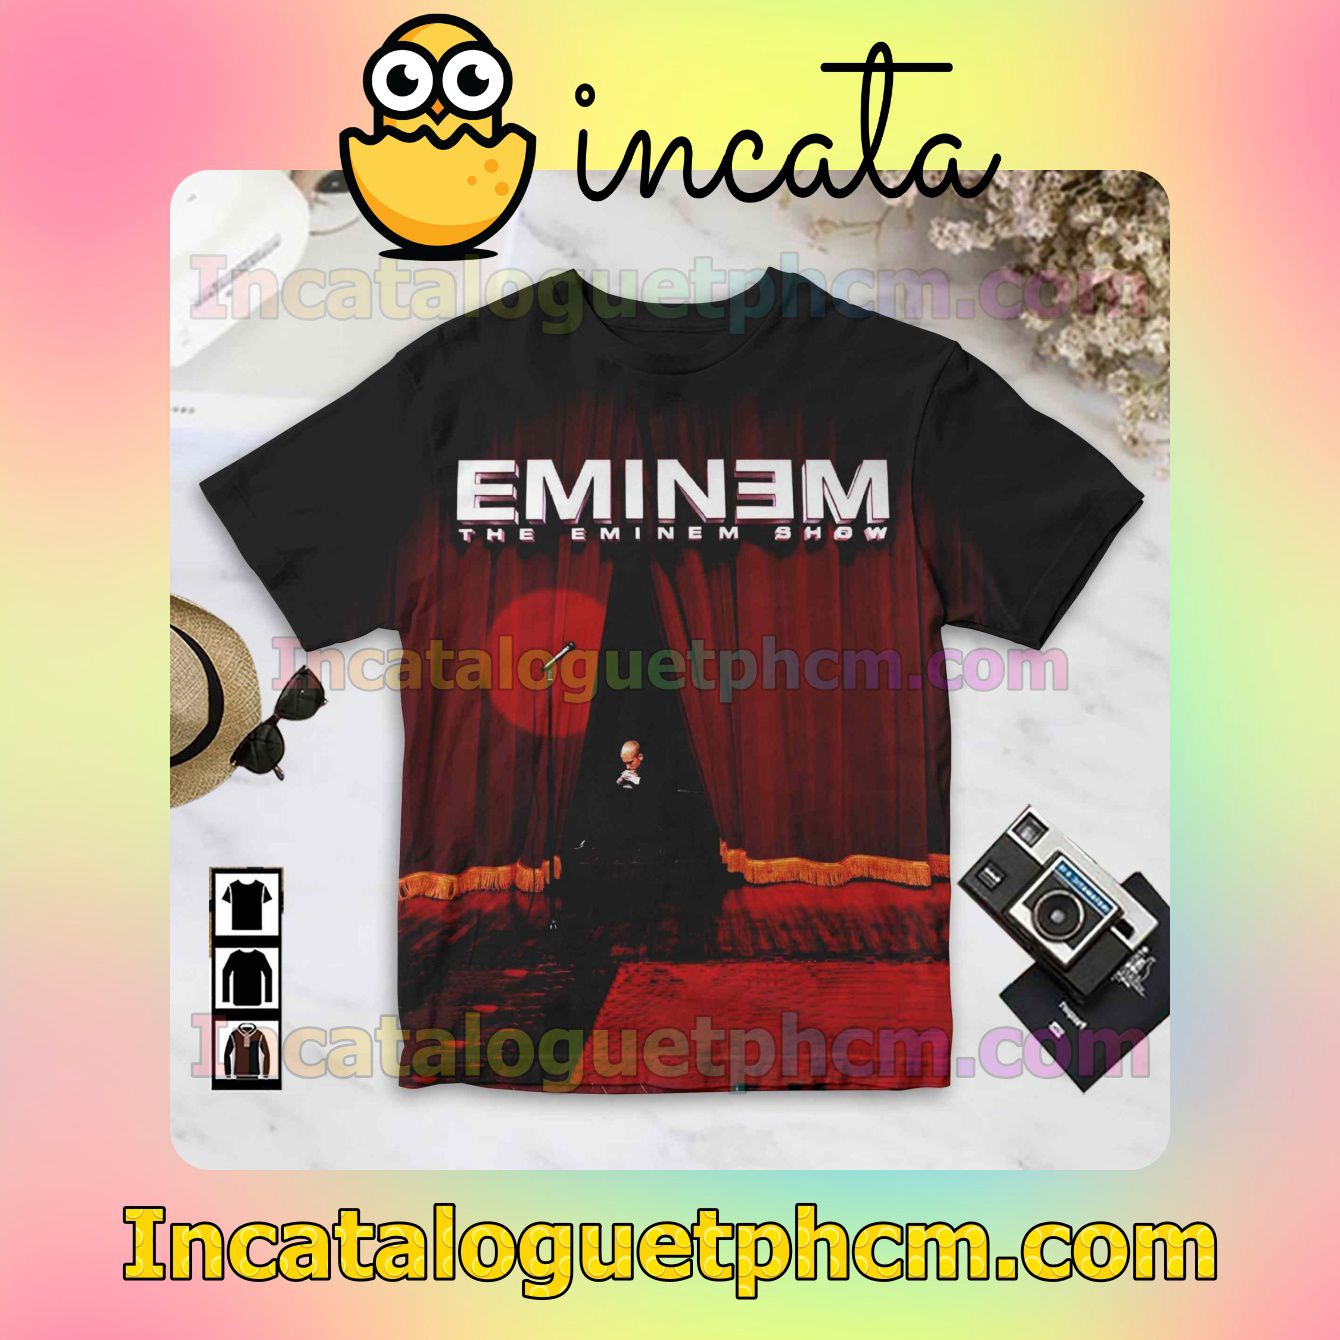 Eminem The Eminem Show Album Cover For Fan Shirt